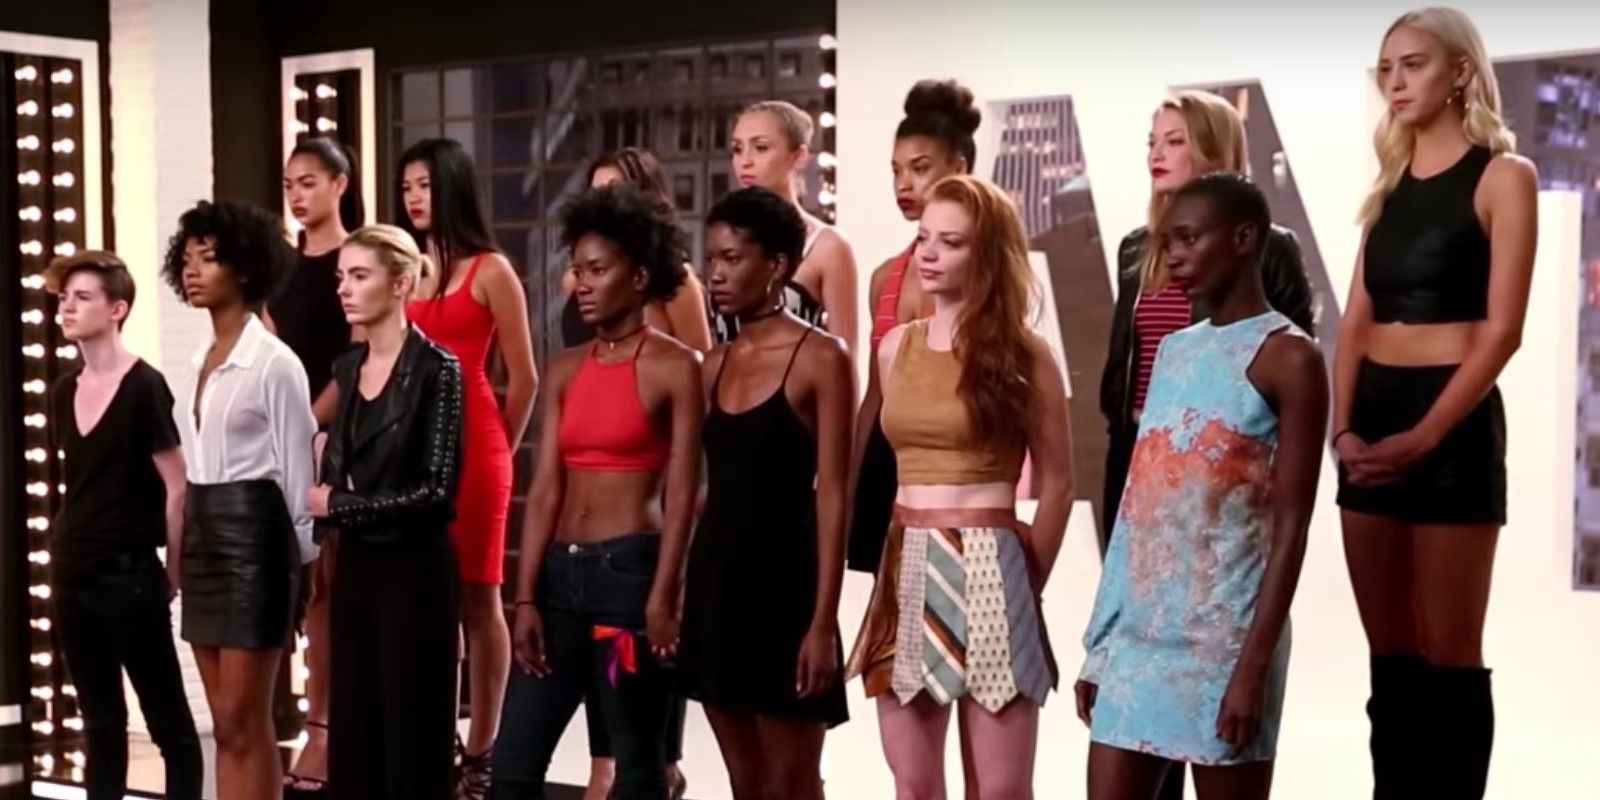 The contestants in VH1's America's Next Top Model revival